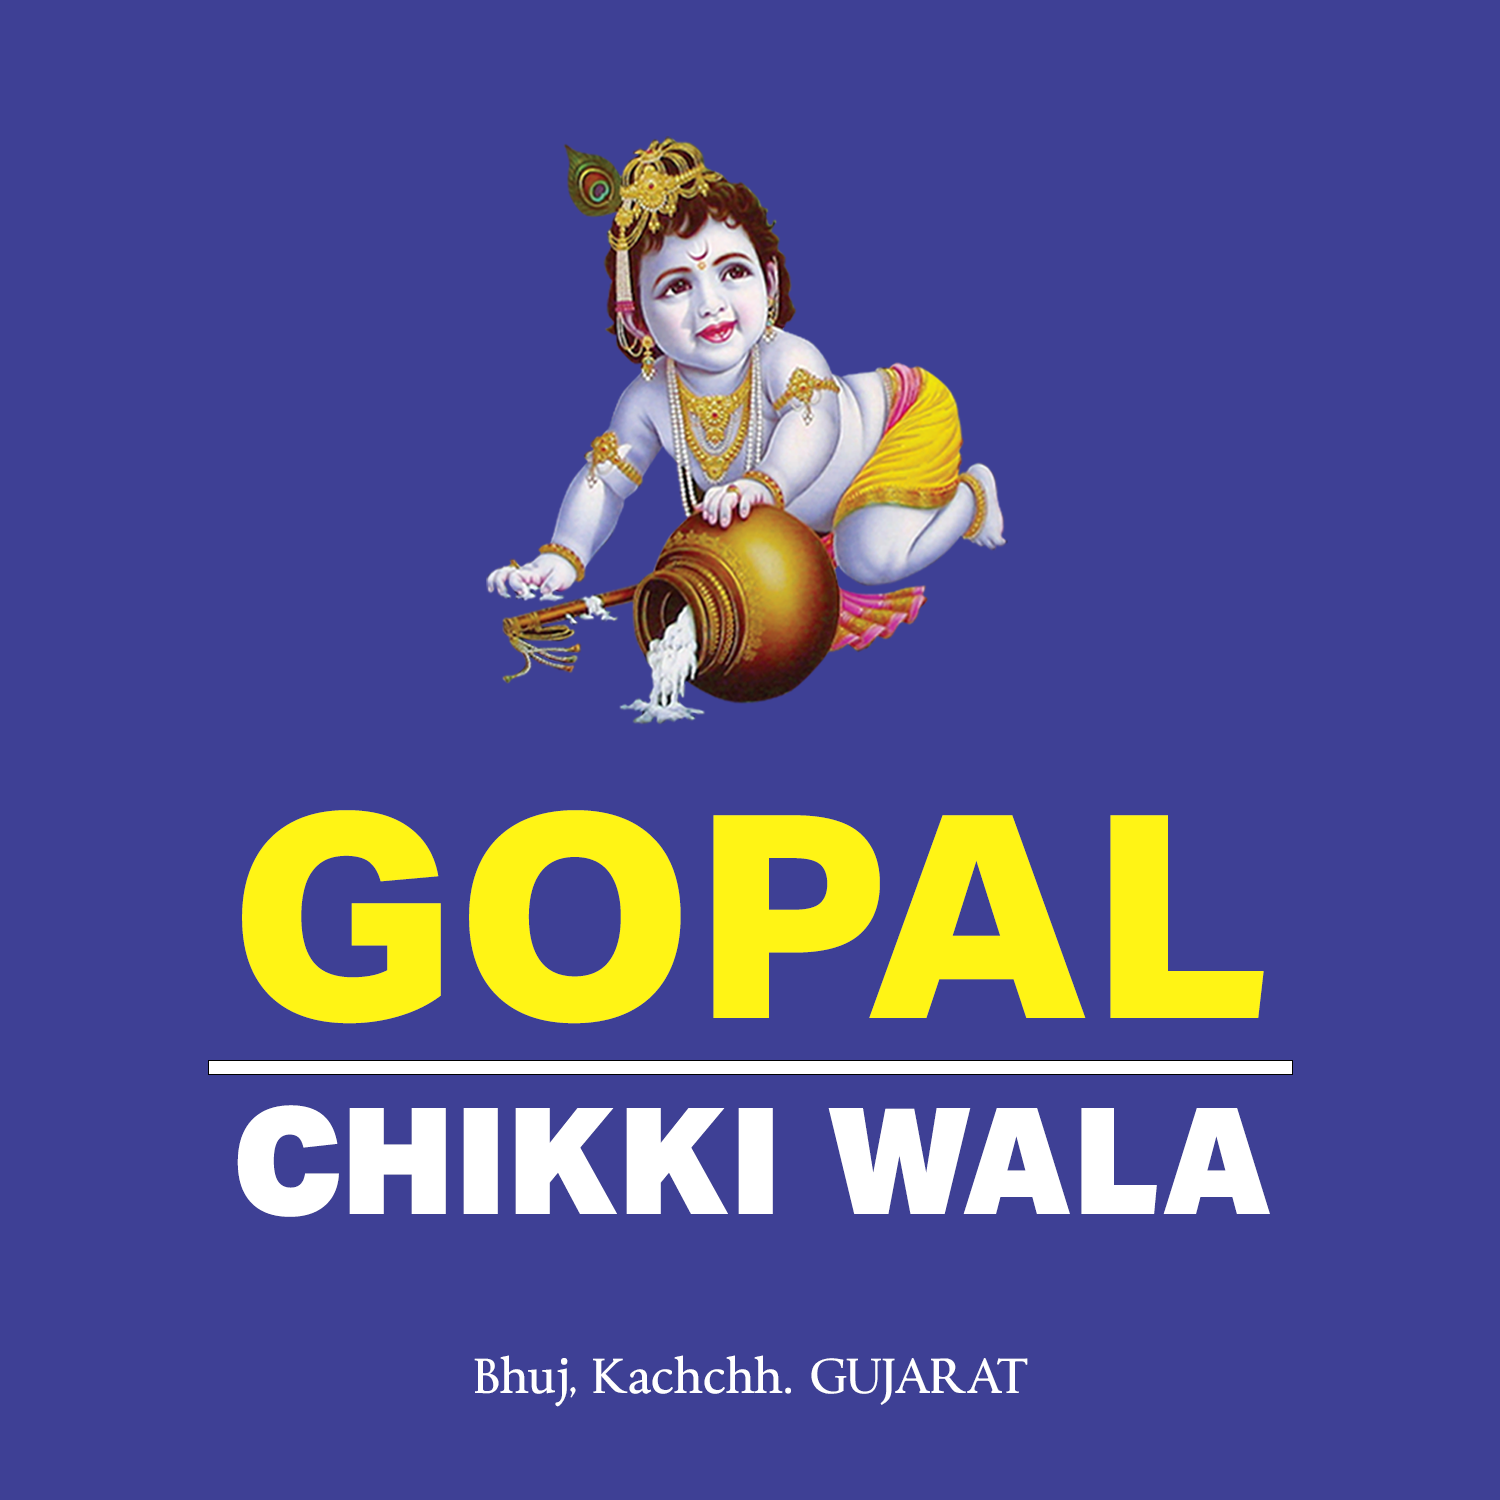 Gopal Chikkiwala